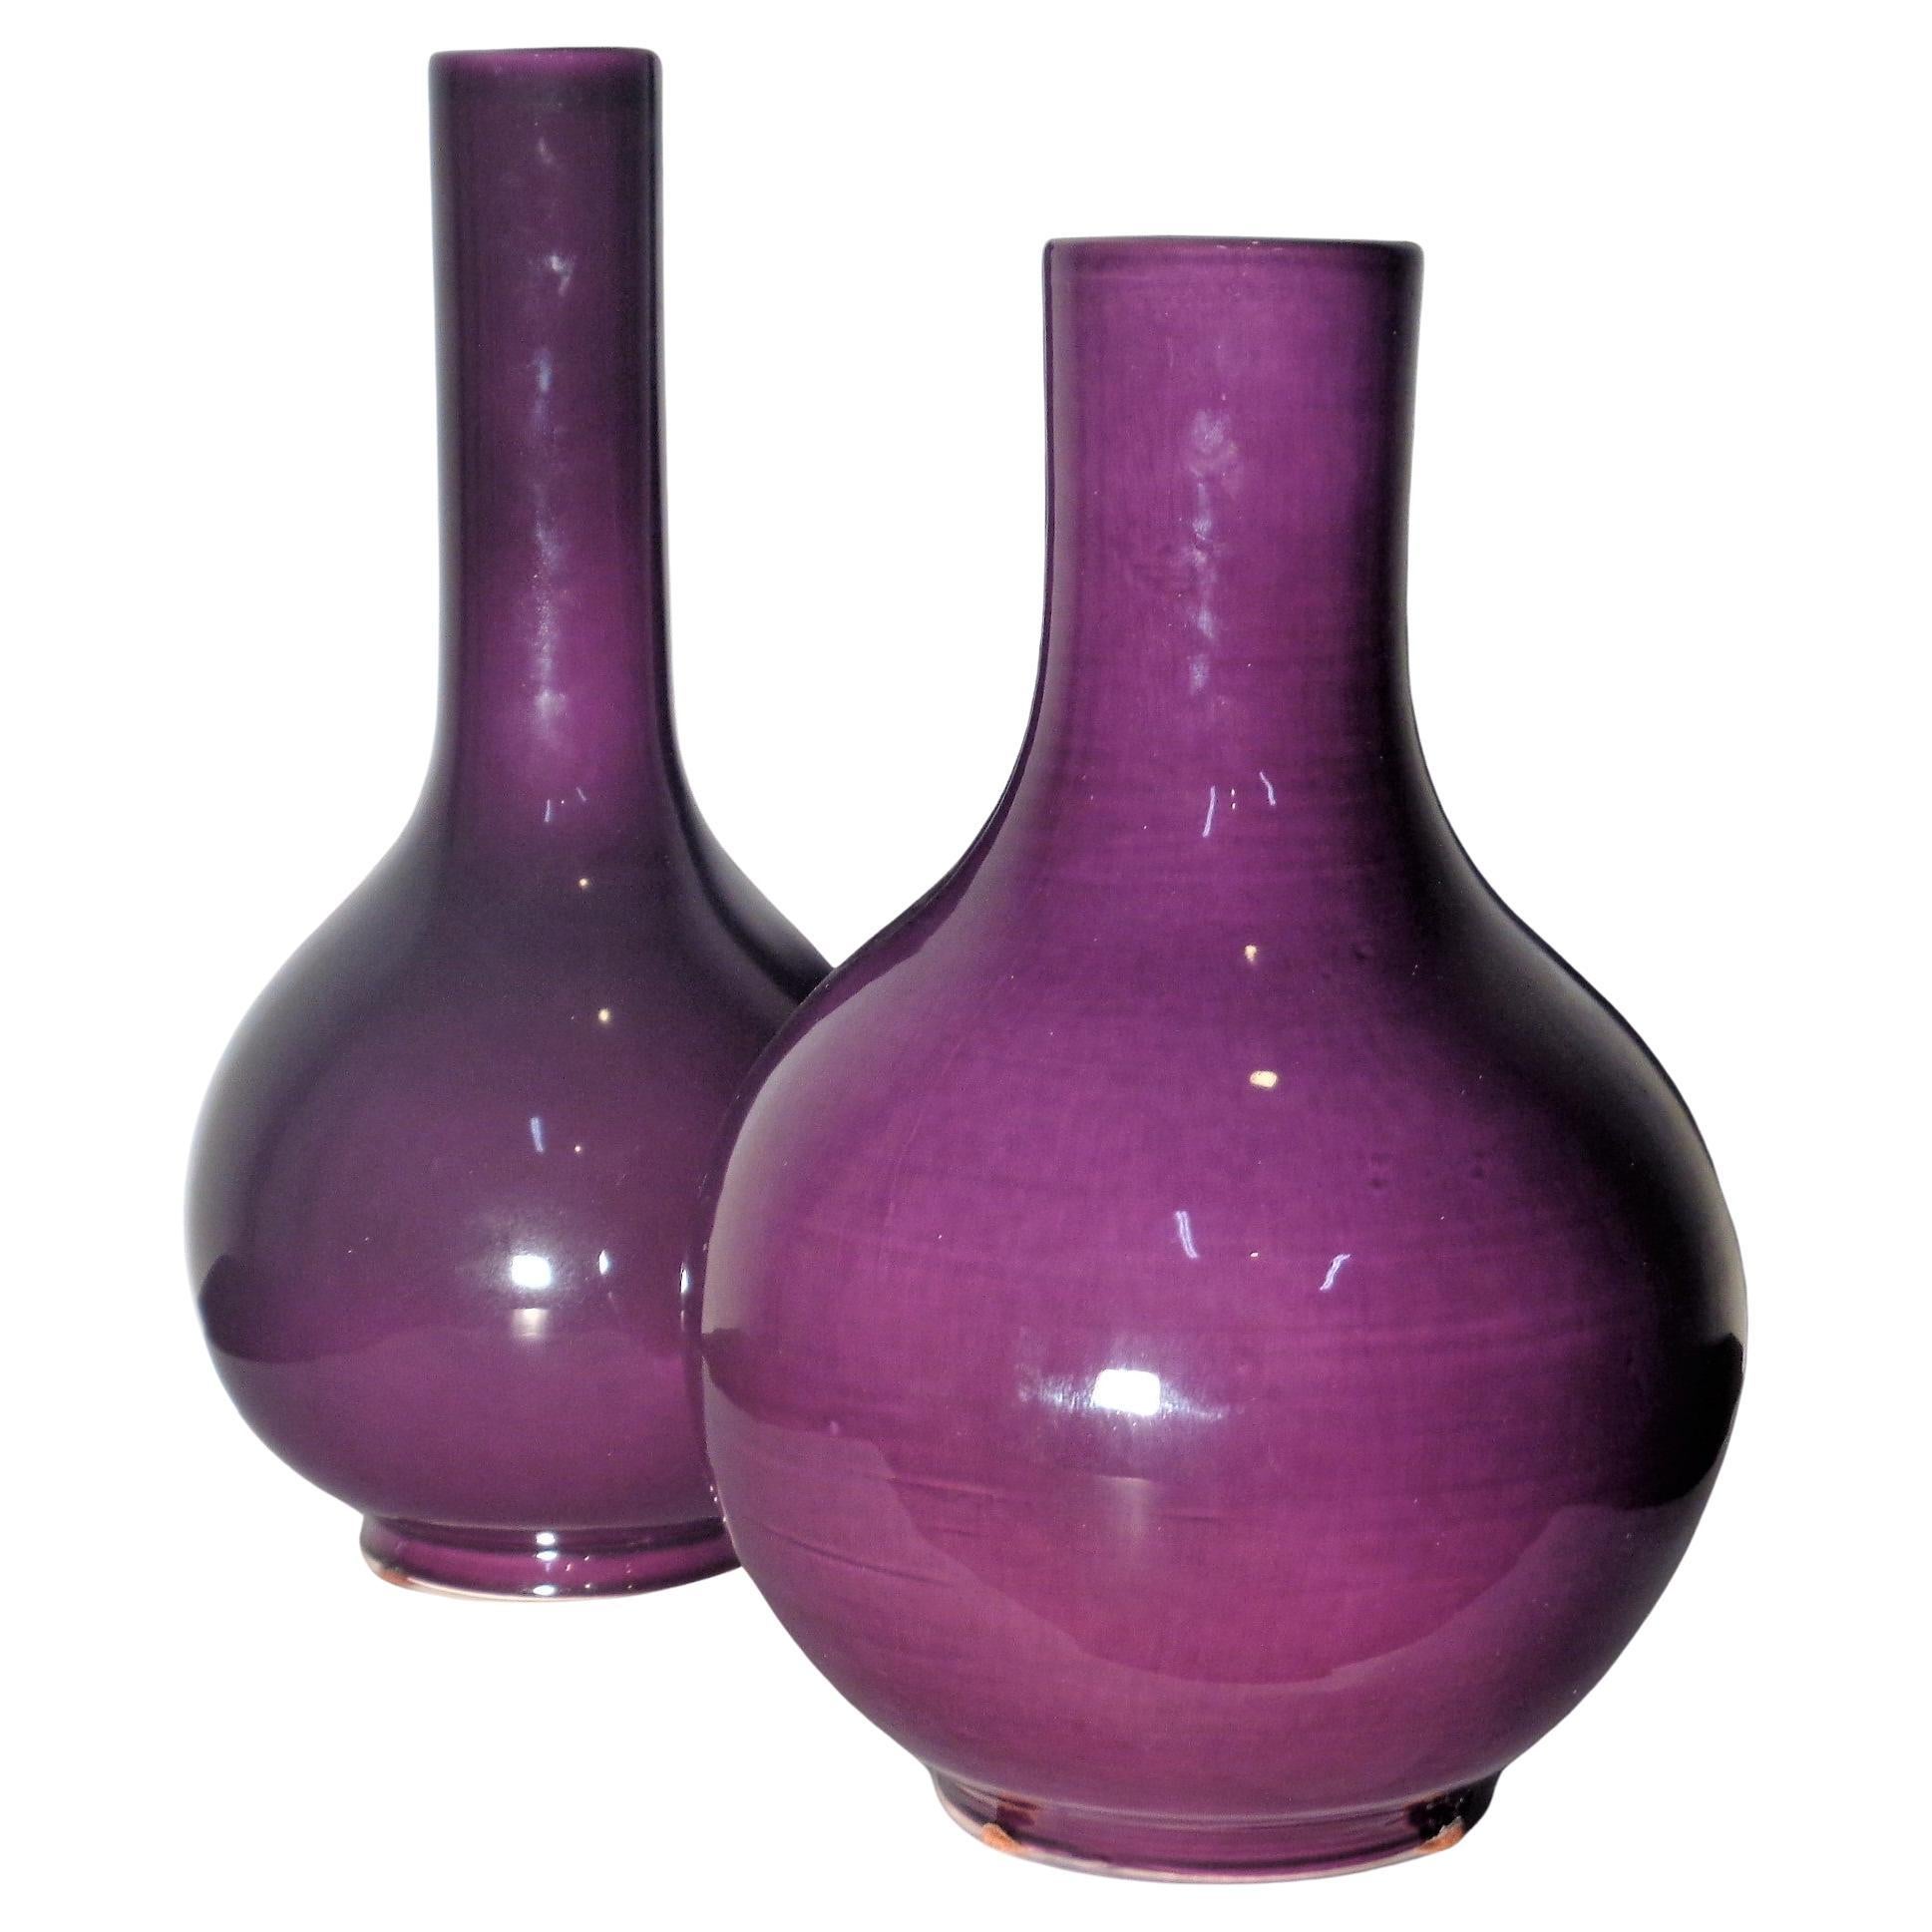 Large Ming Style Plum Purple Glazed Porcelain Vases, Made in Italy